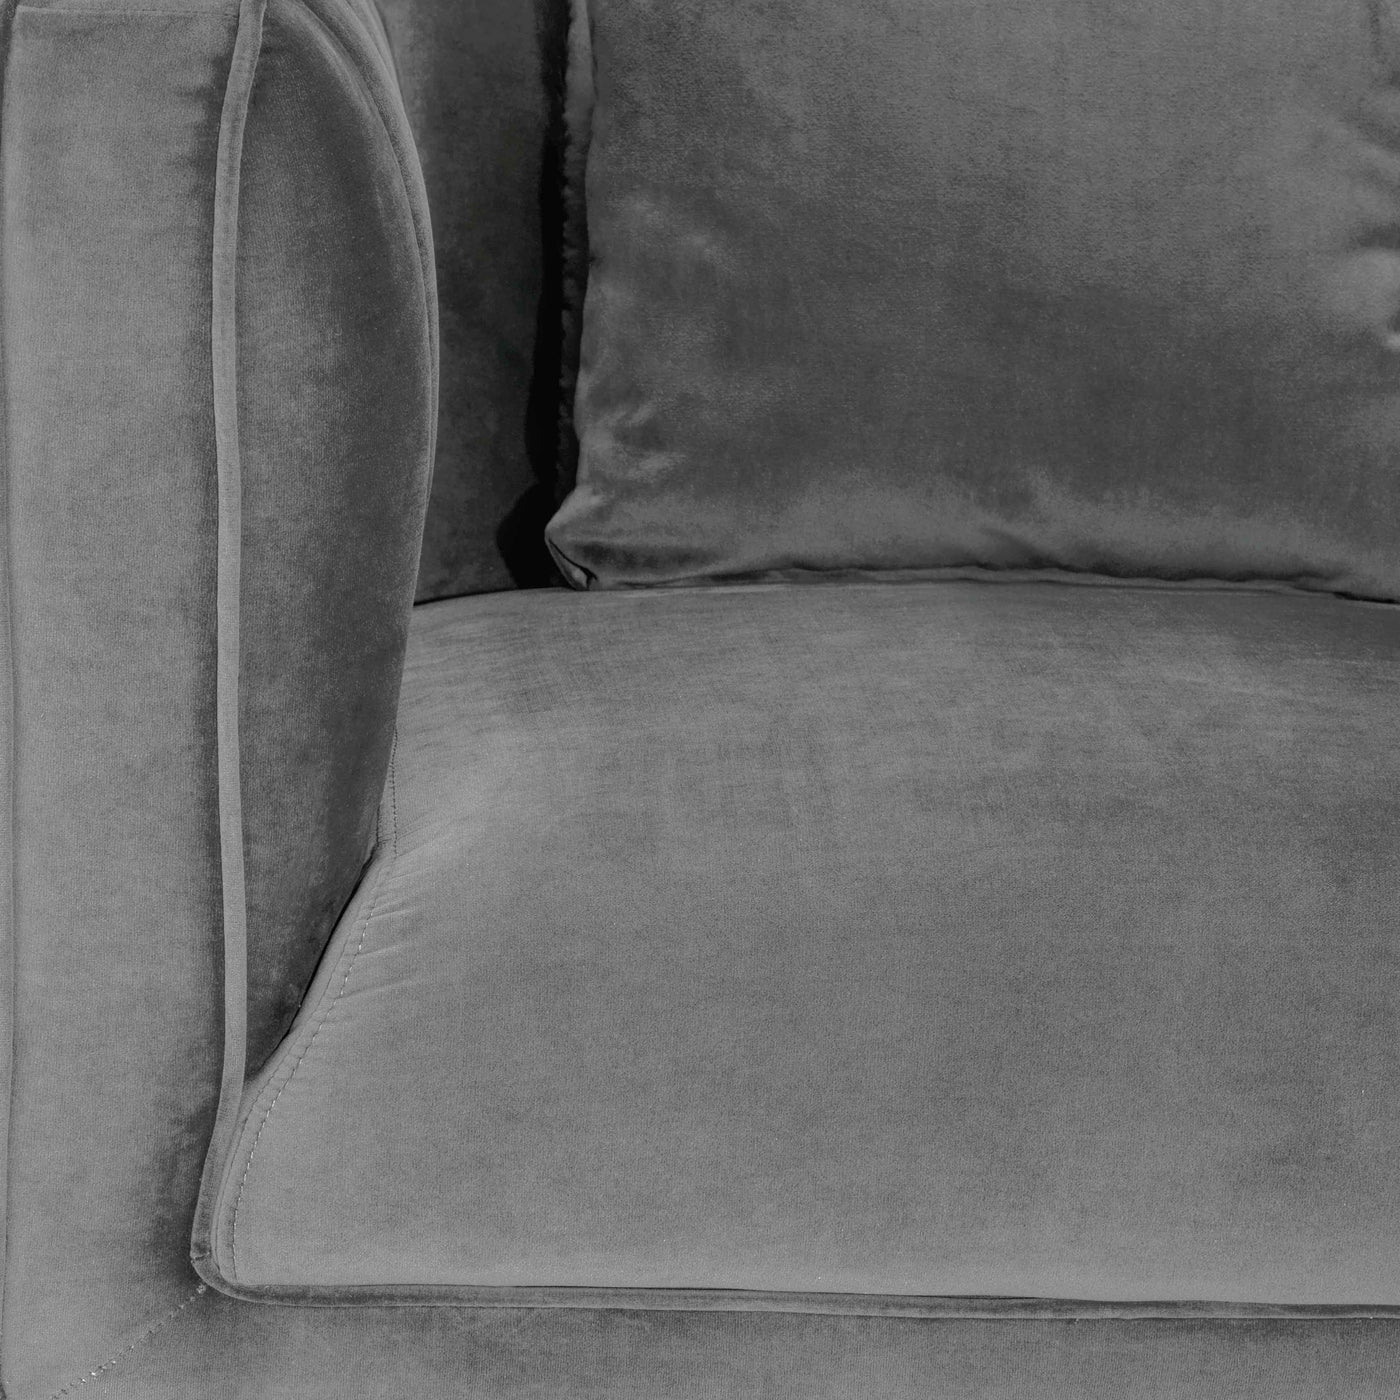 Celina Sofa, Loveseat and Chair Set - Light Grey